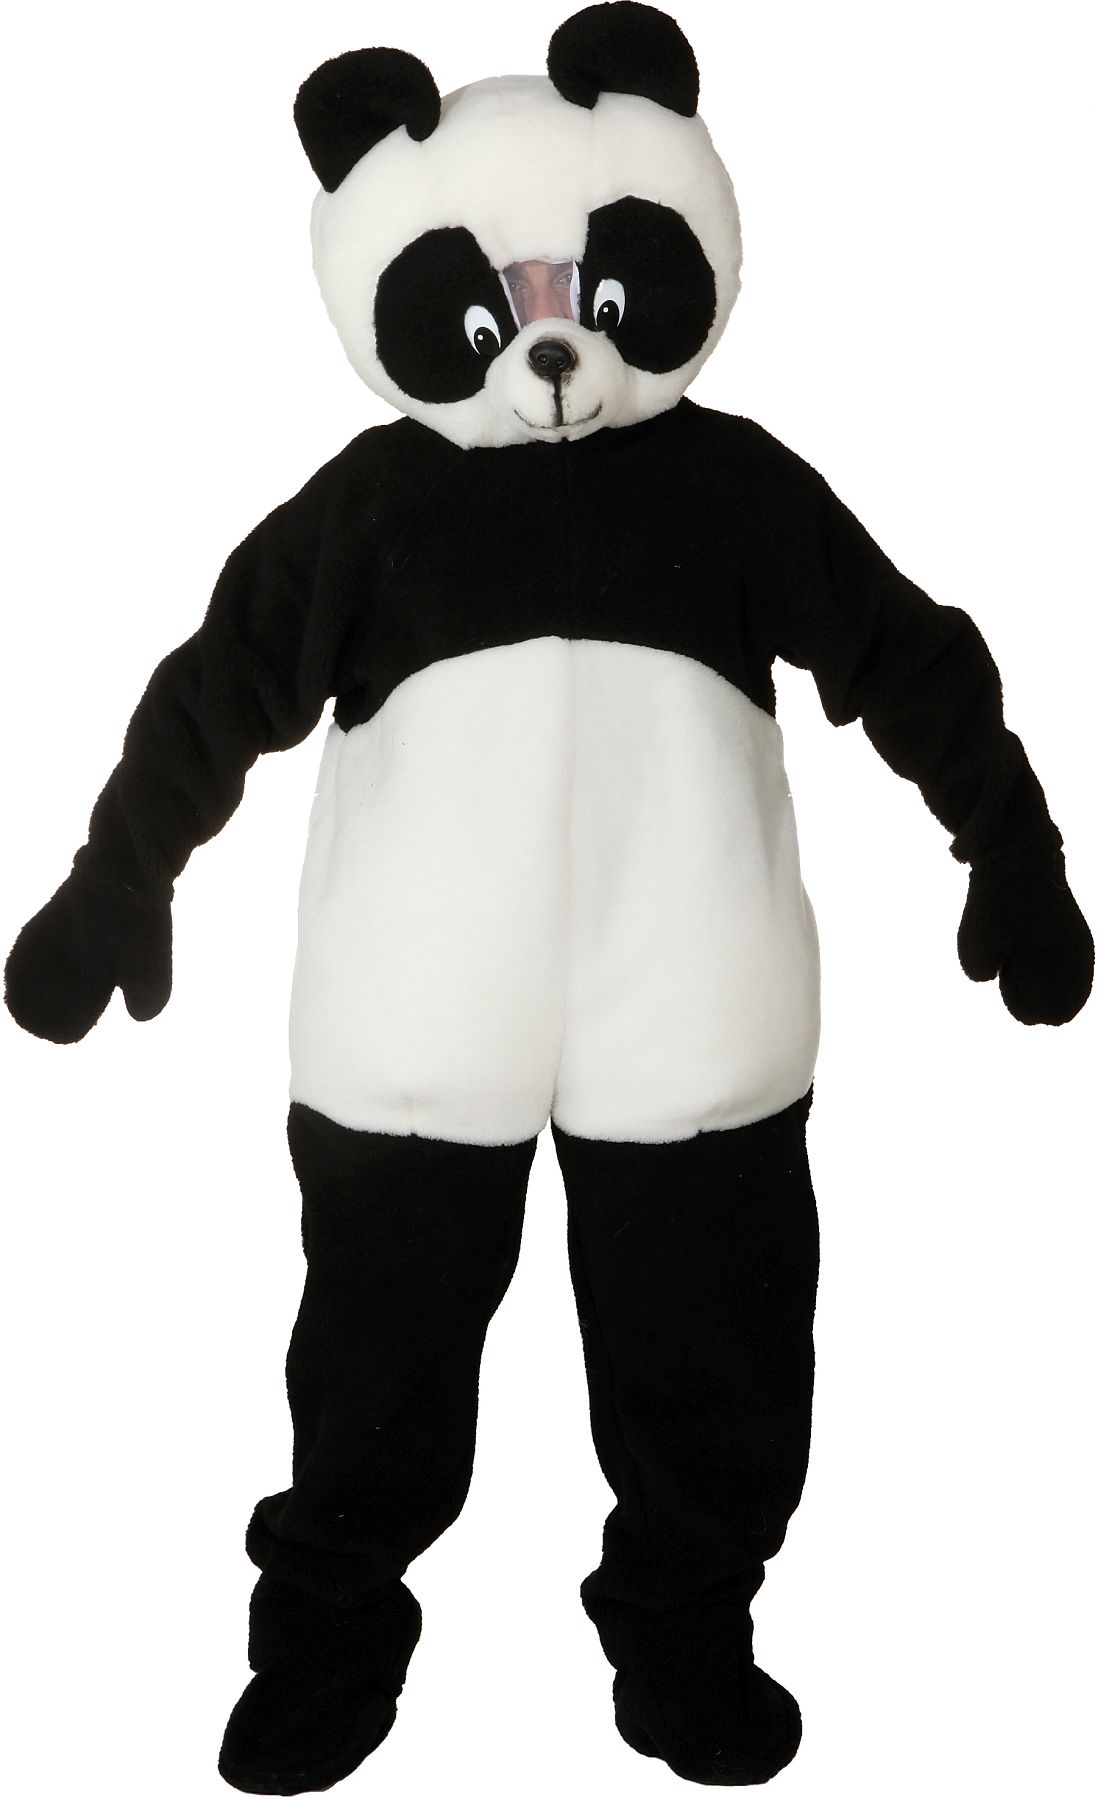 Big panda overall with head